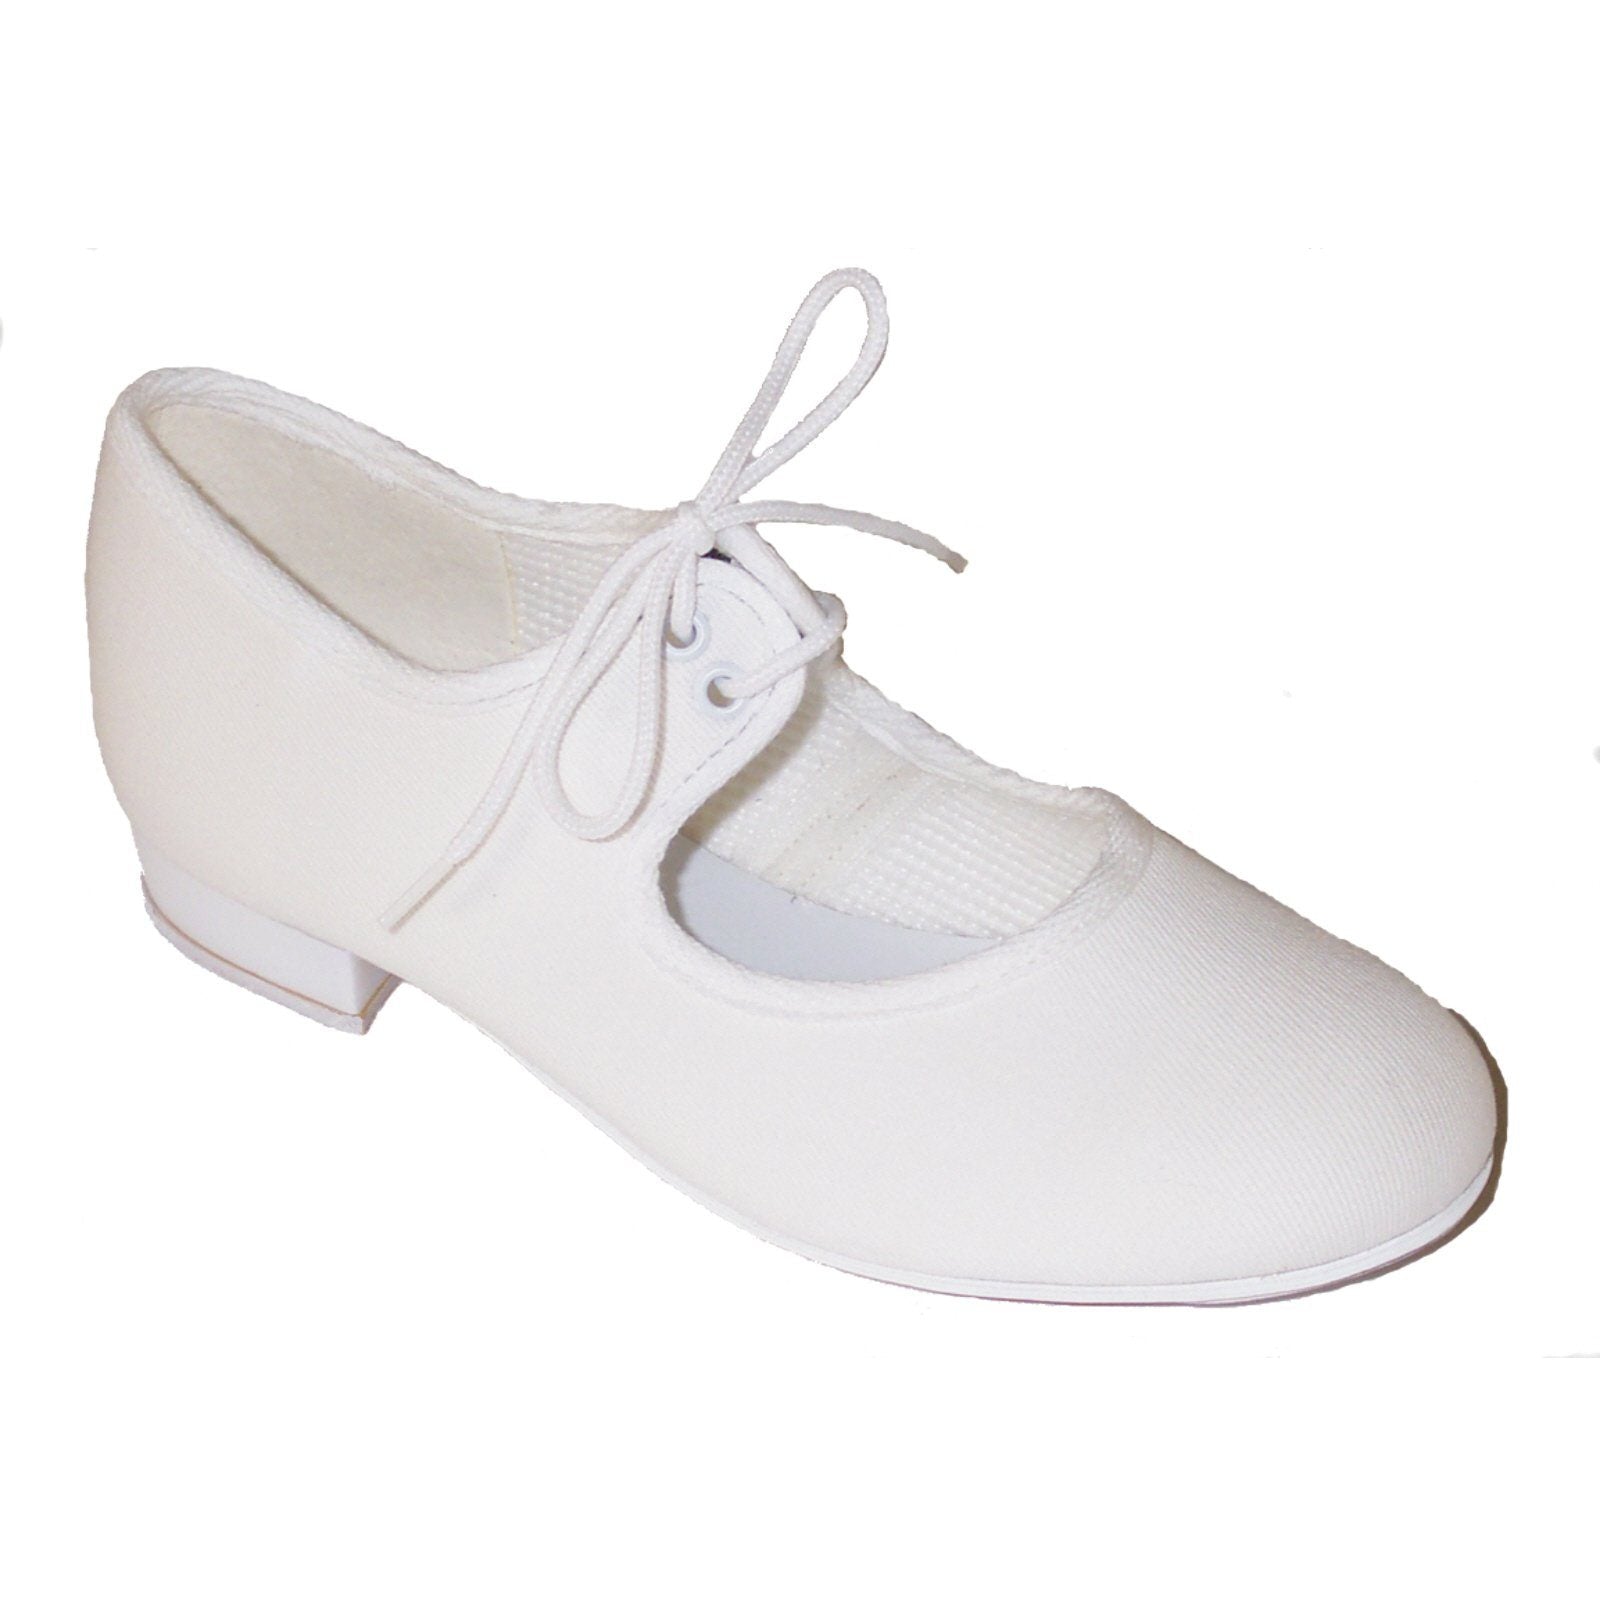 WHITE CANVAS LOW HEEL TAP SHOES Dance Shoes Dancers World 